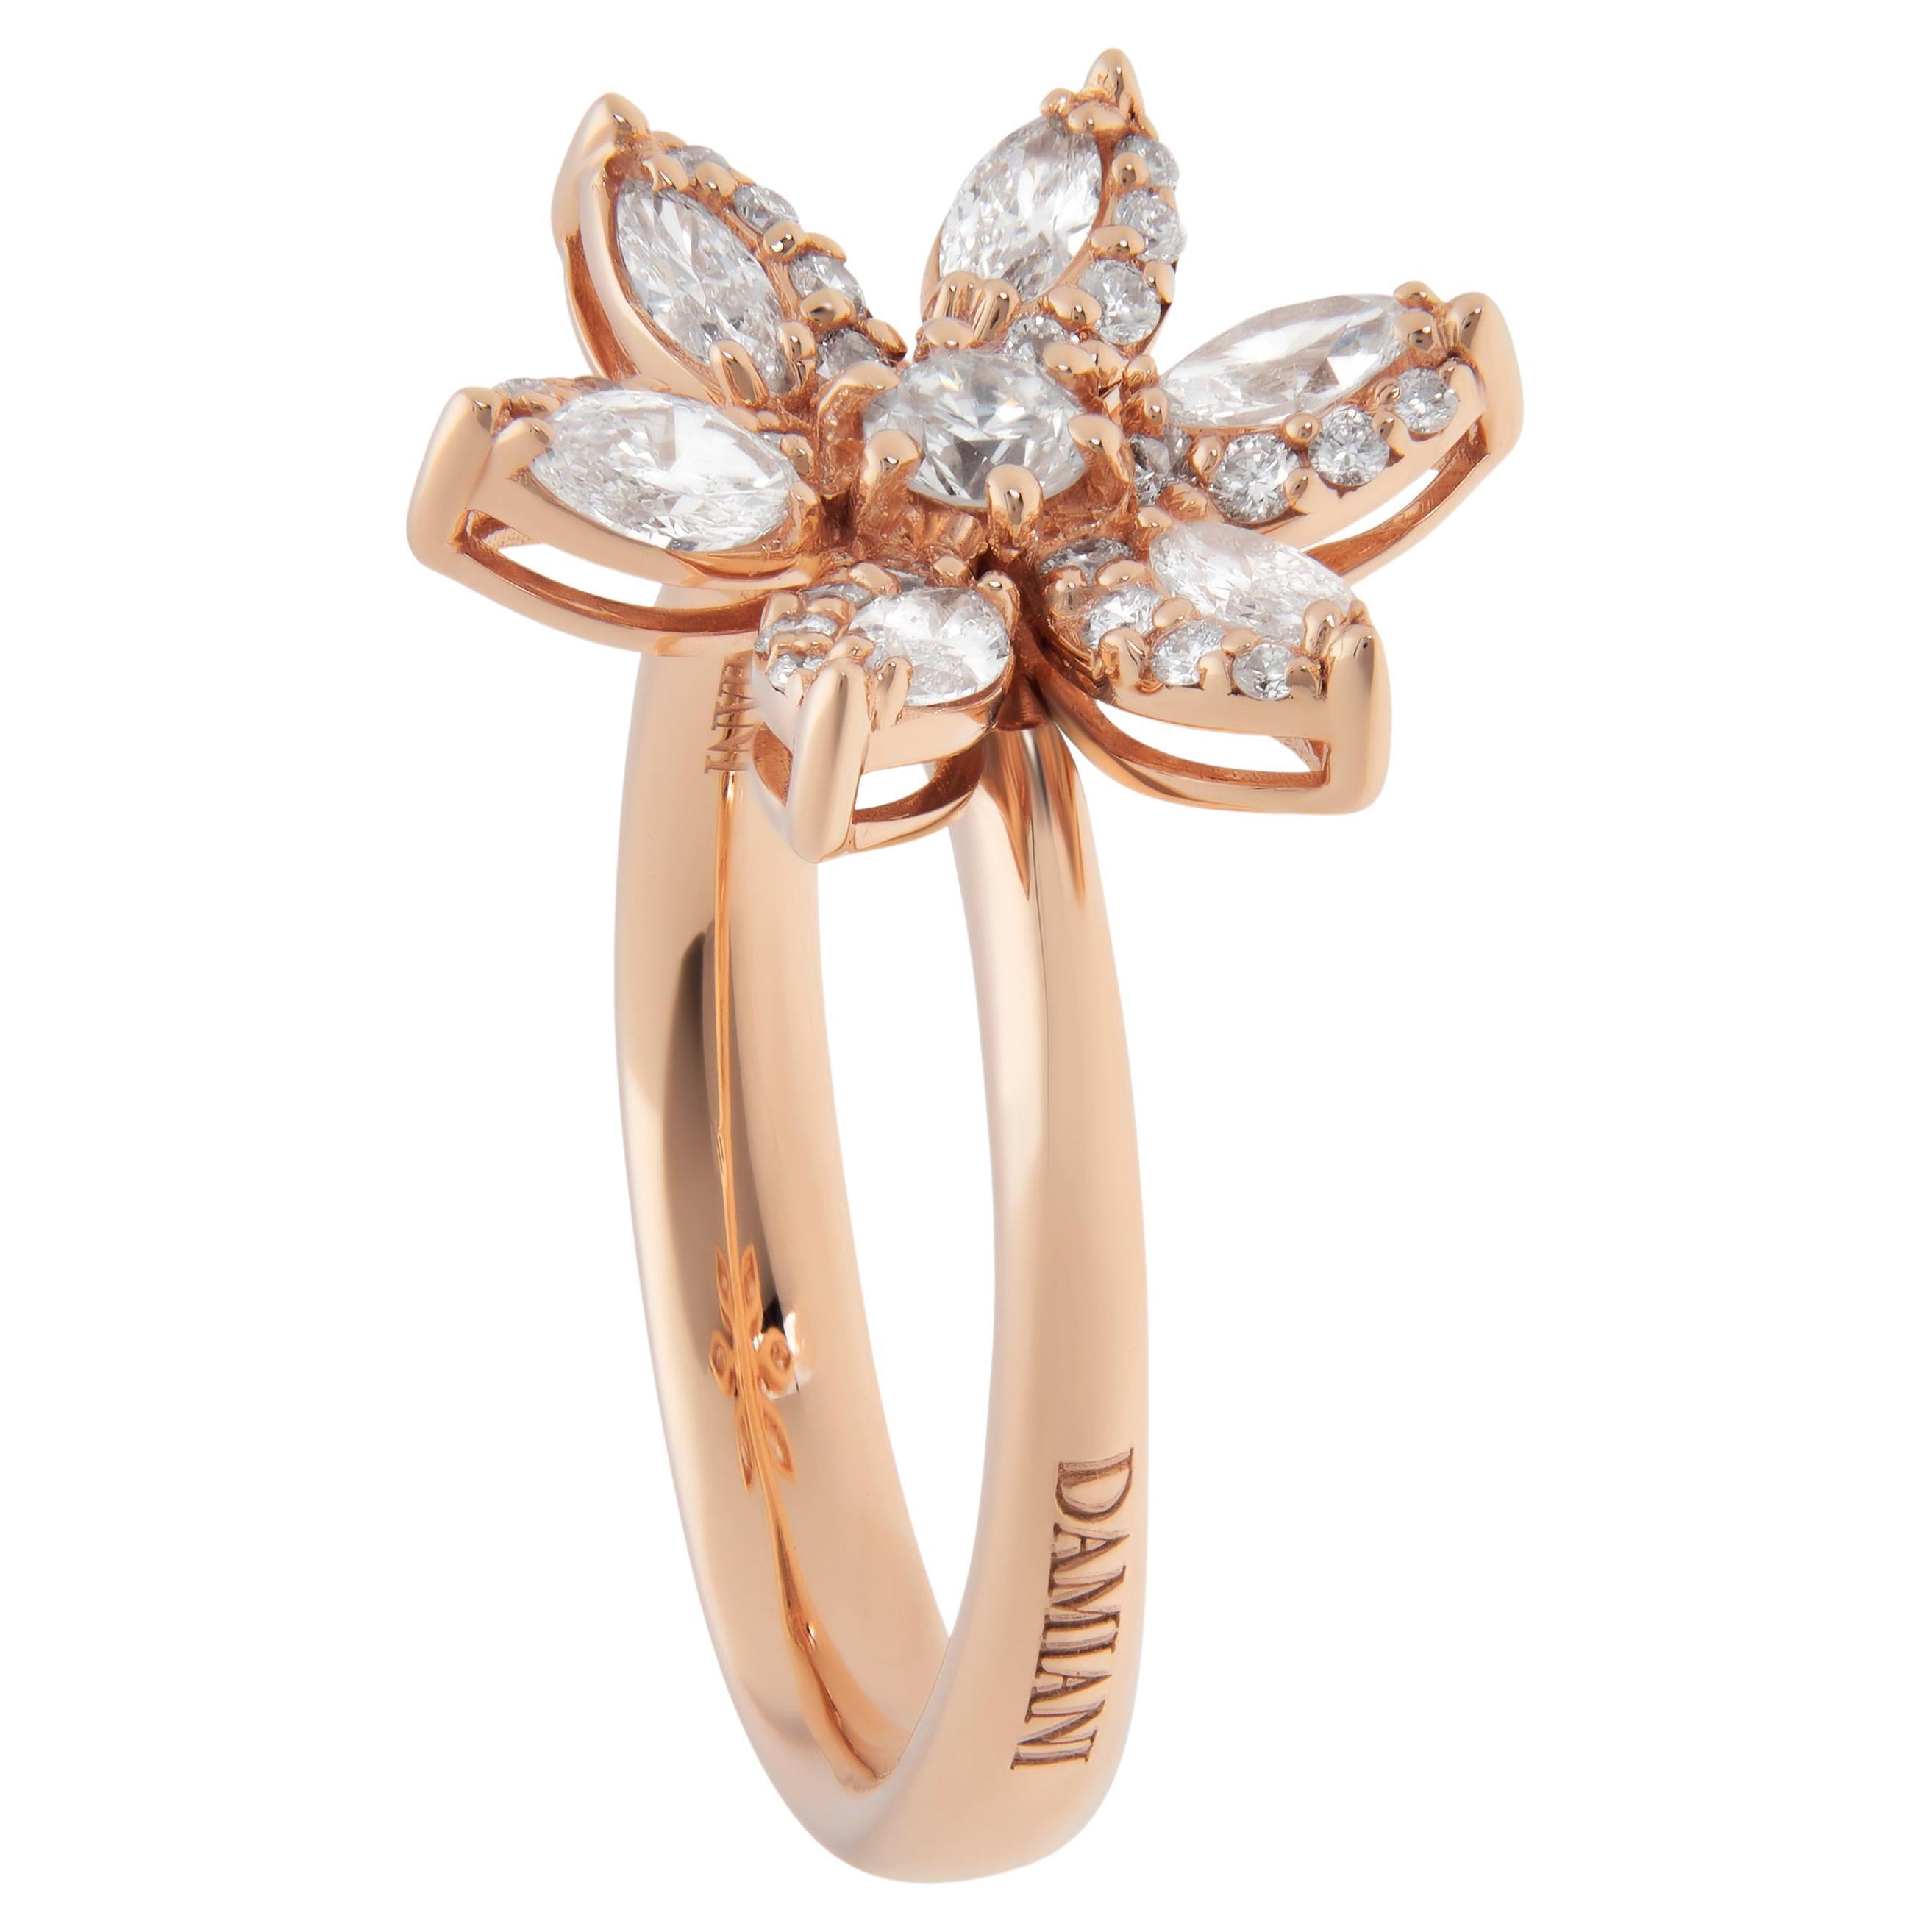 Damiani 18K Rose Gold, Diamond Statement Ring sz. 6.5 For Sale